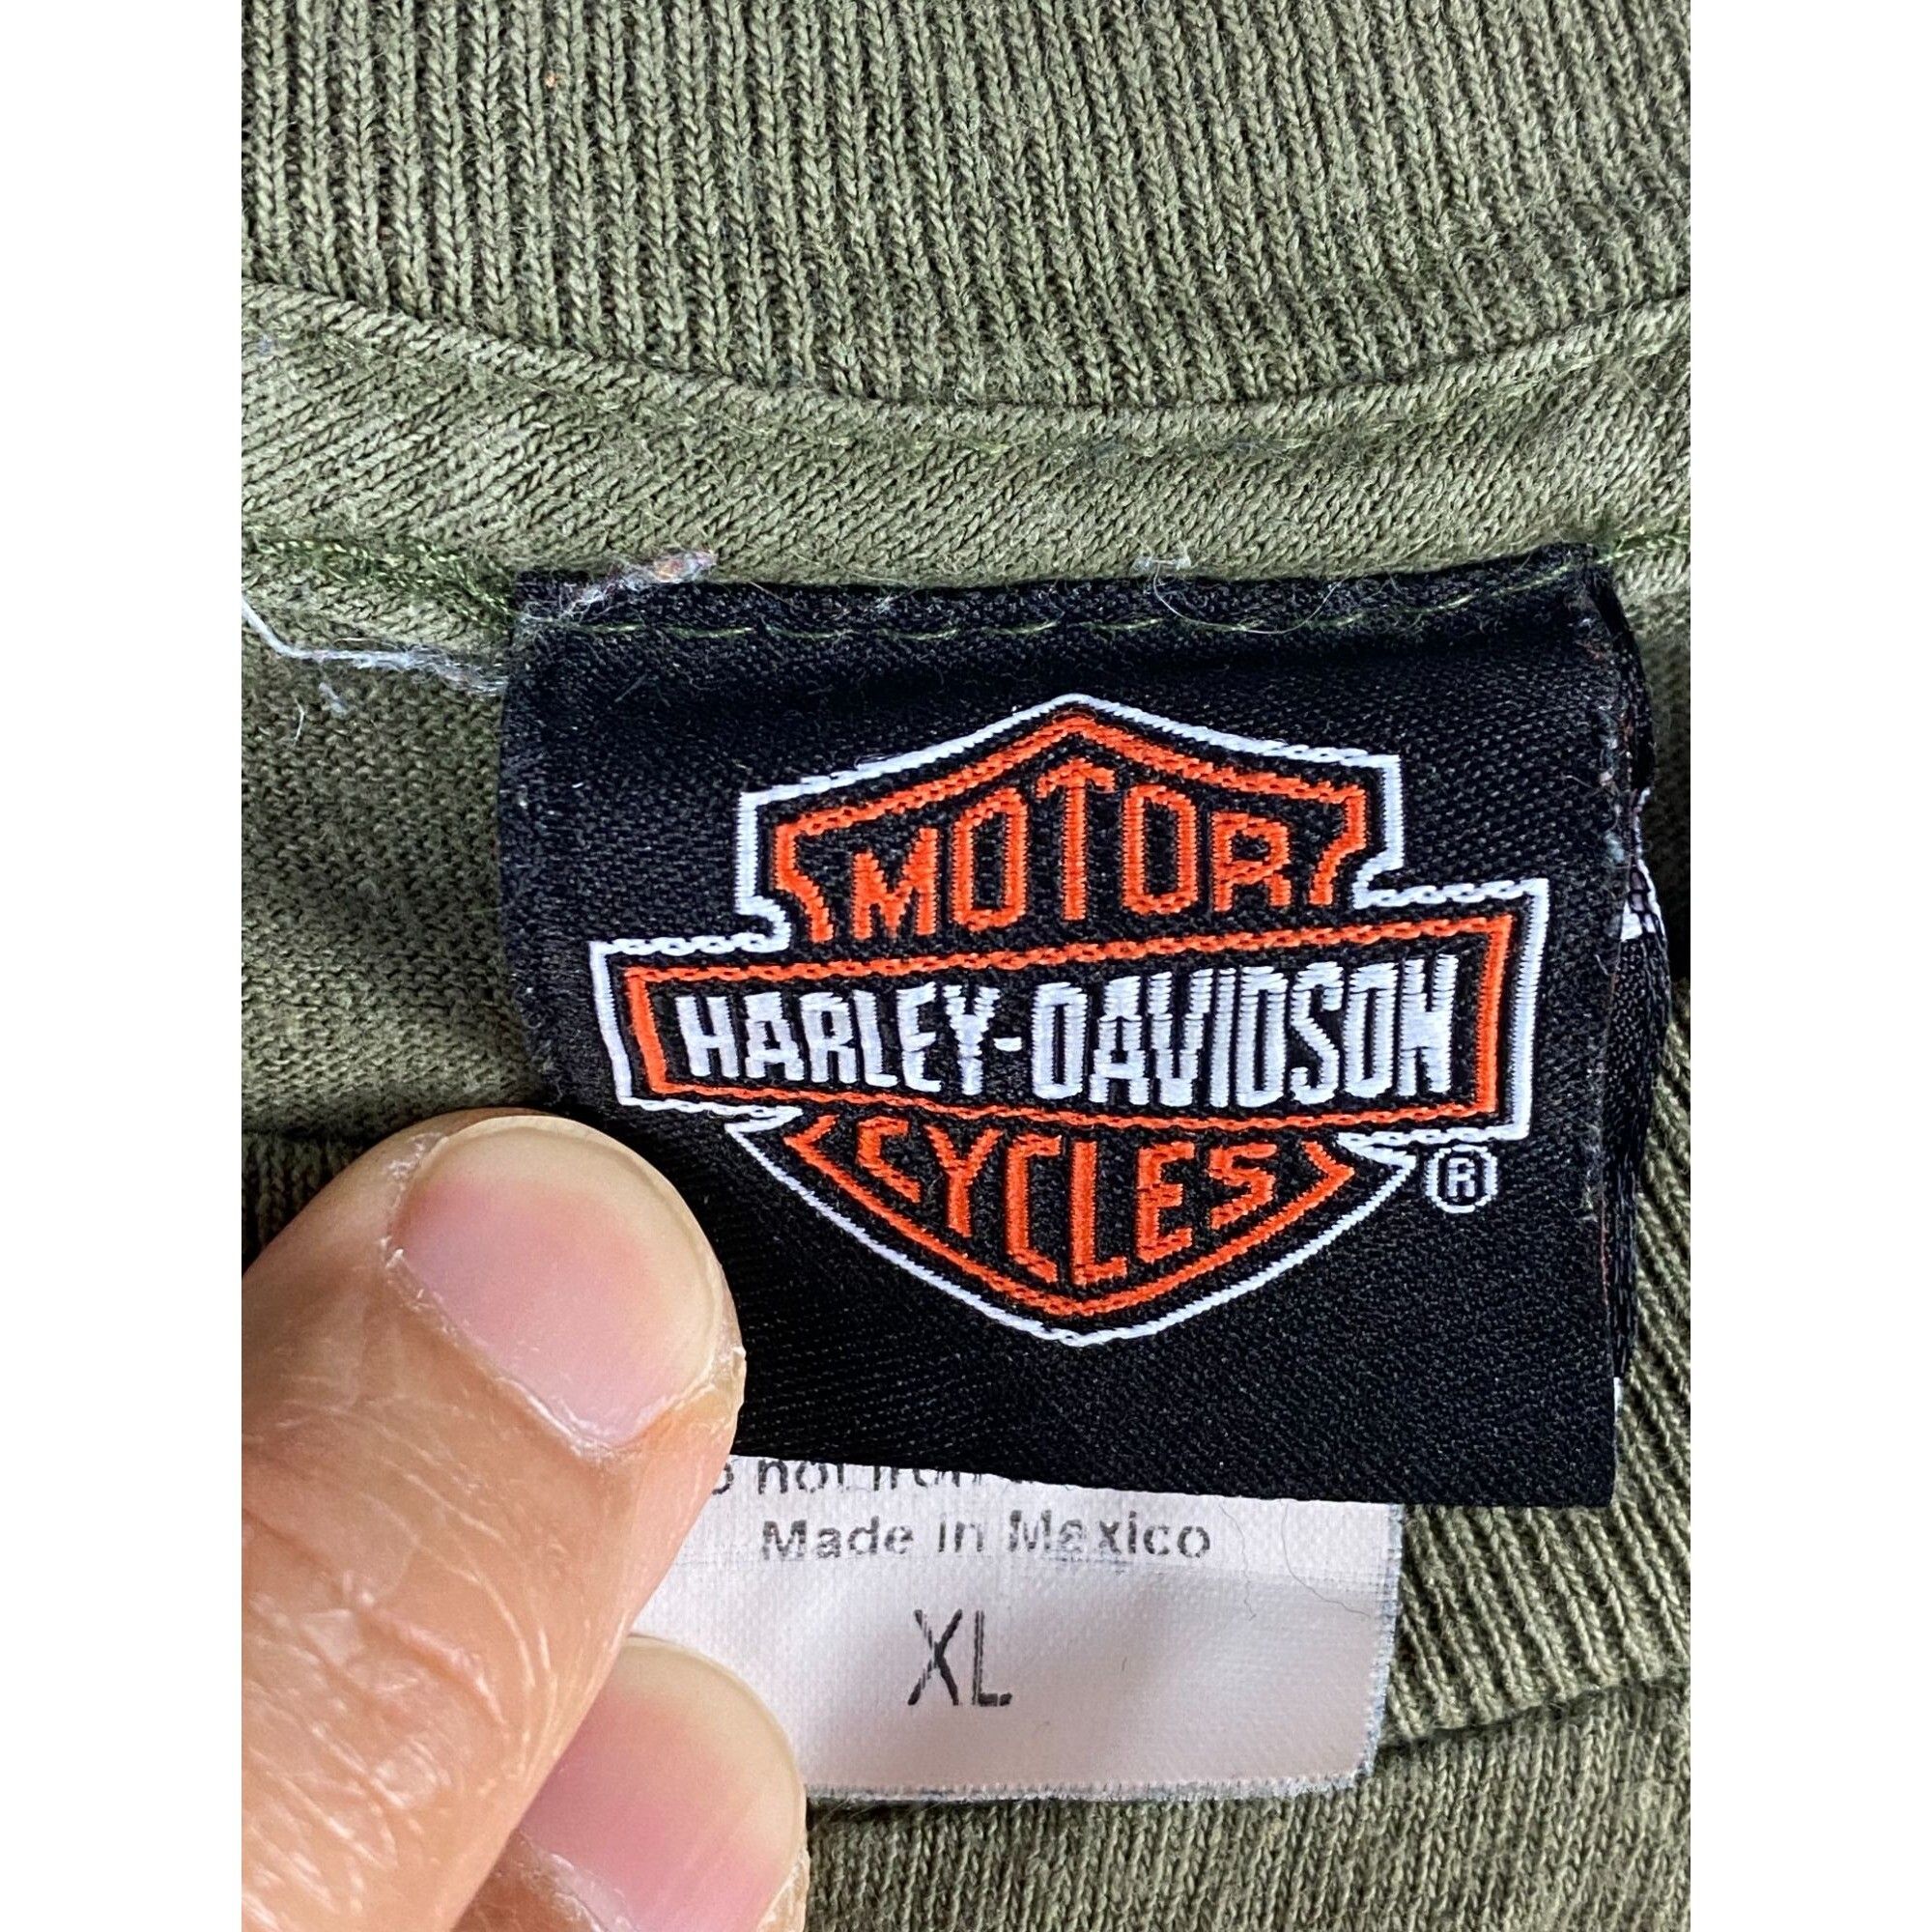 Harley Davidson Vintage Harley Davidson Pearl Harbor Honolulu, Hawaii Tee Sh Size US XL / EU 56 / 4 - 3 Thumbnail